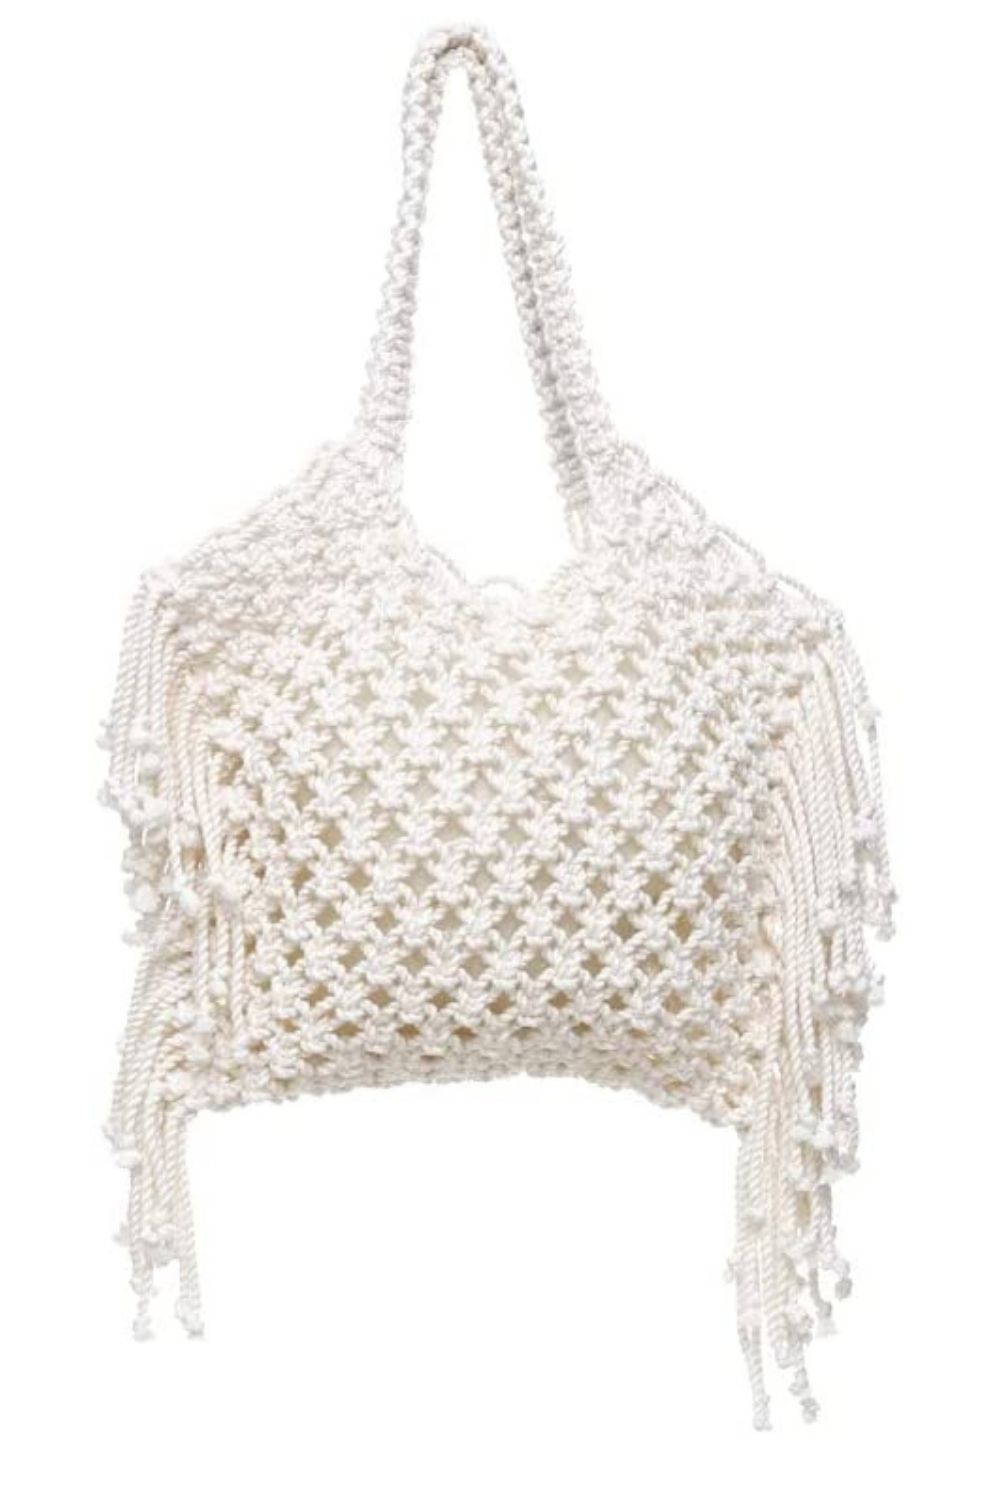 4 Best Crochet Bag Amazon 2022 | Affordable price